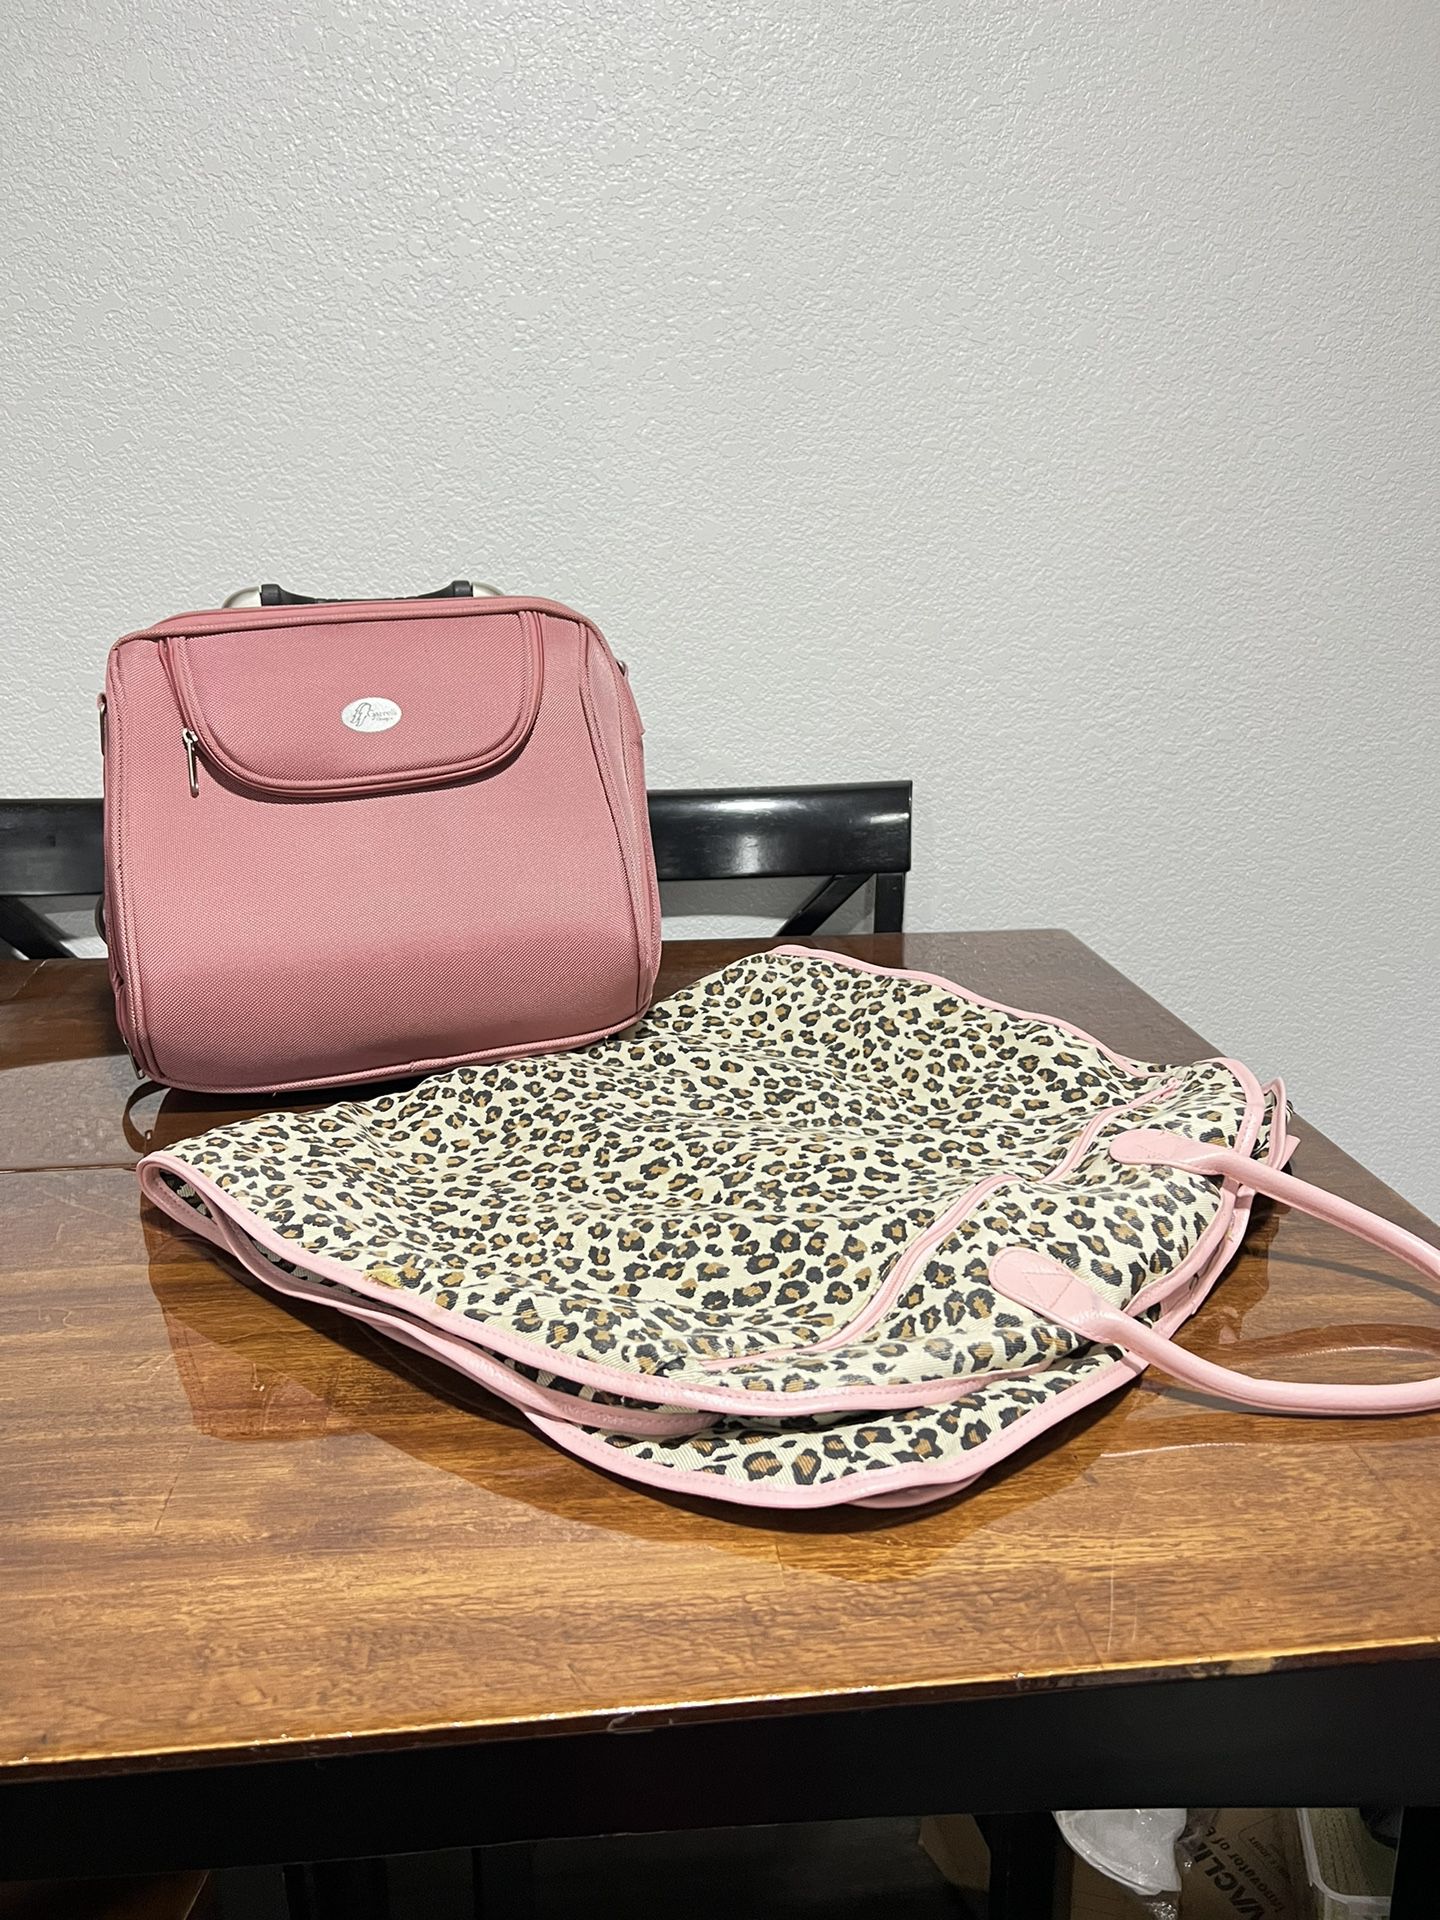 Travel  Animal Print Travel Garment Bag Pink Zippers Handles Light Weight  Travel Makeup Organizer Cosmetic Bag 